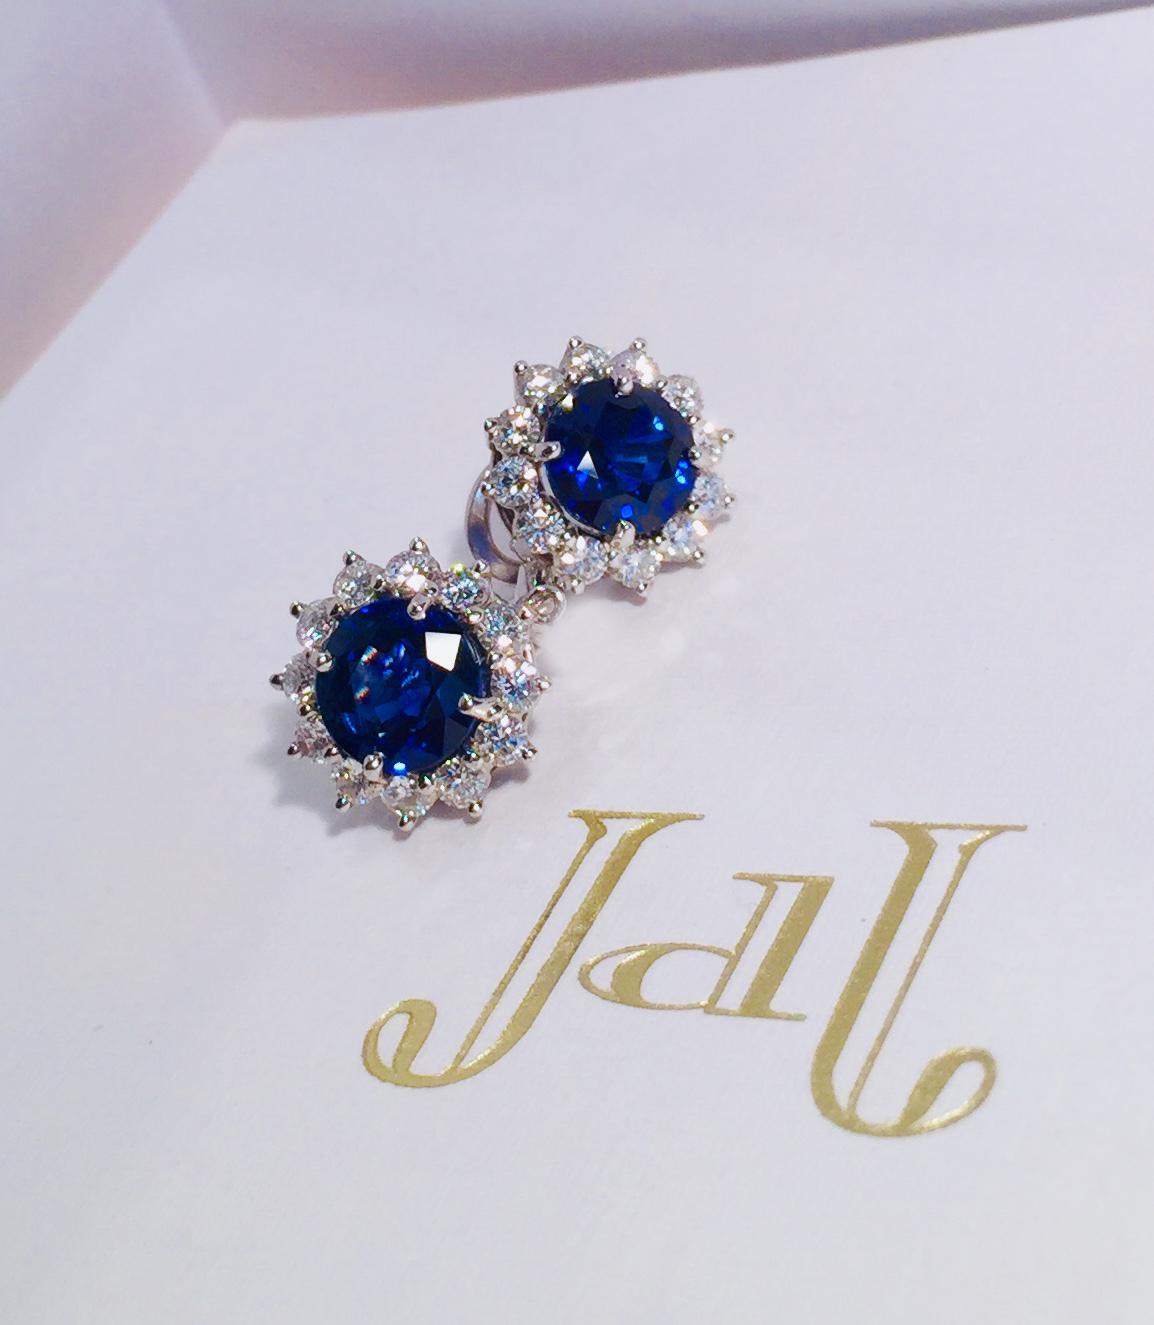 Contemporary Fine Brilliant Cut Blue Sapphire and Diamond Earrings in Platinum